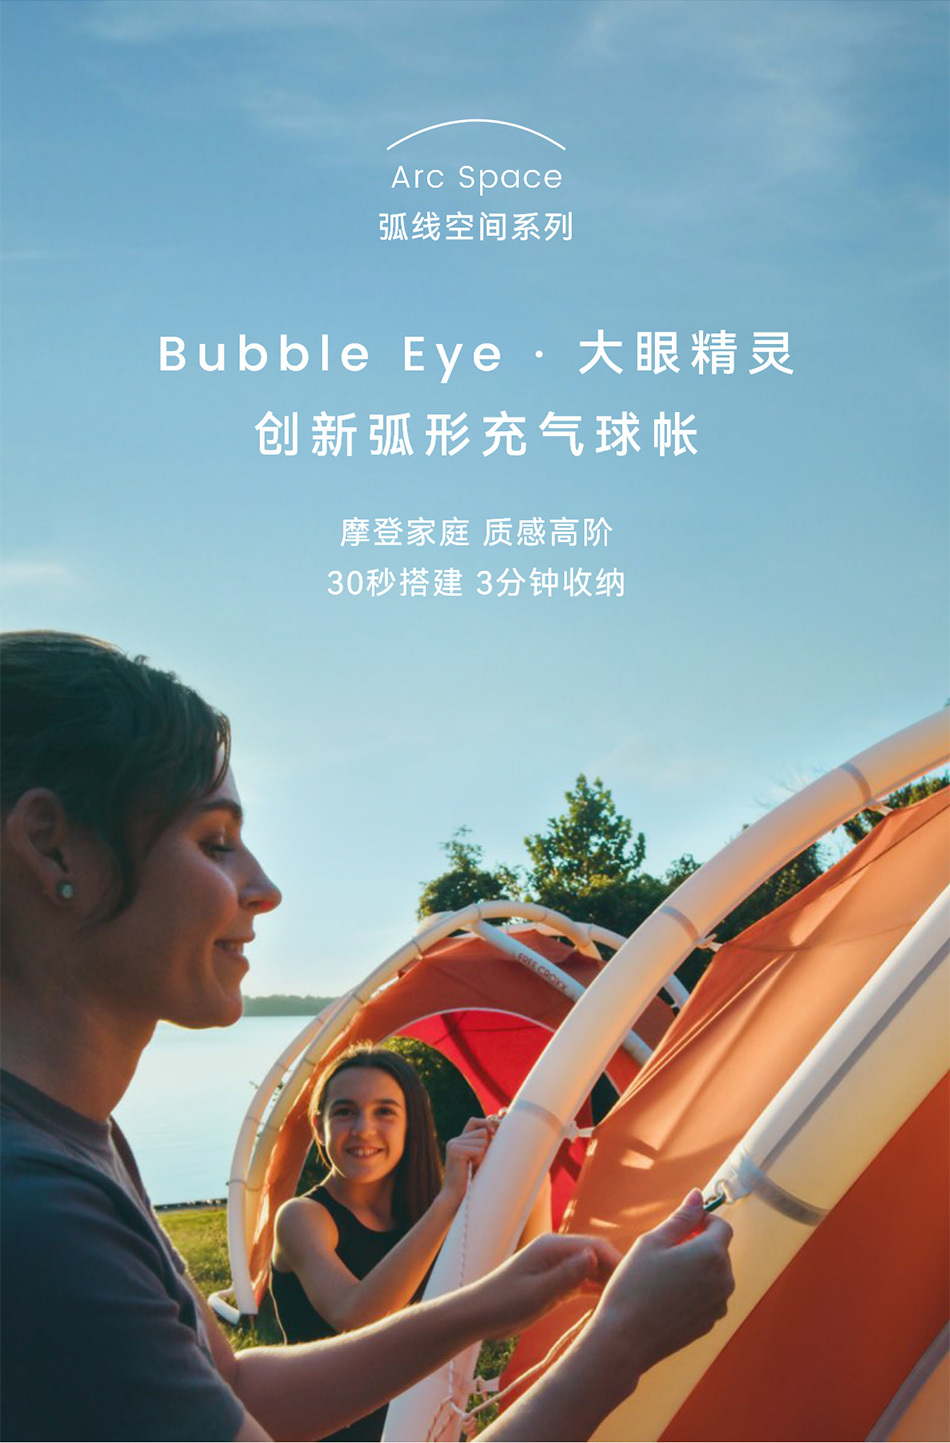 Bubble Eye 大眼精灵气柱帐篷-FREE CROXX孚锐斯科线上精品店